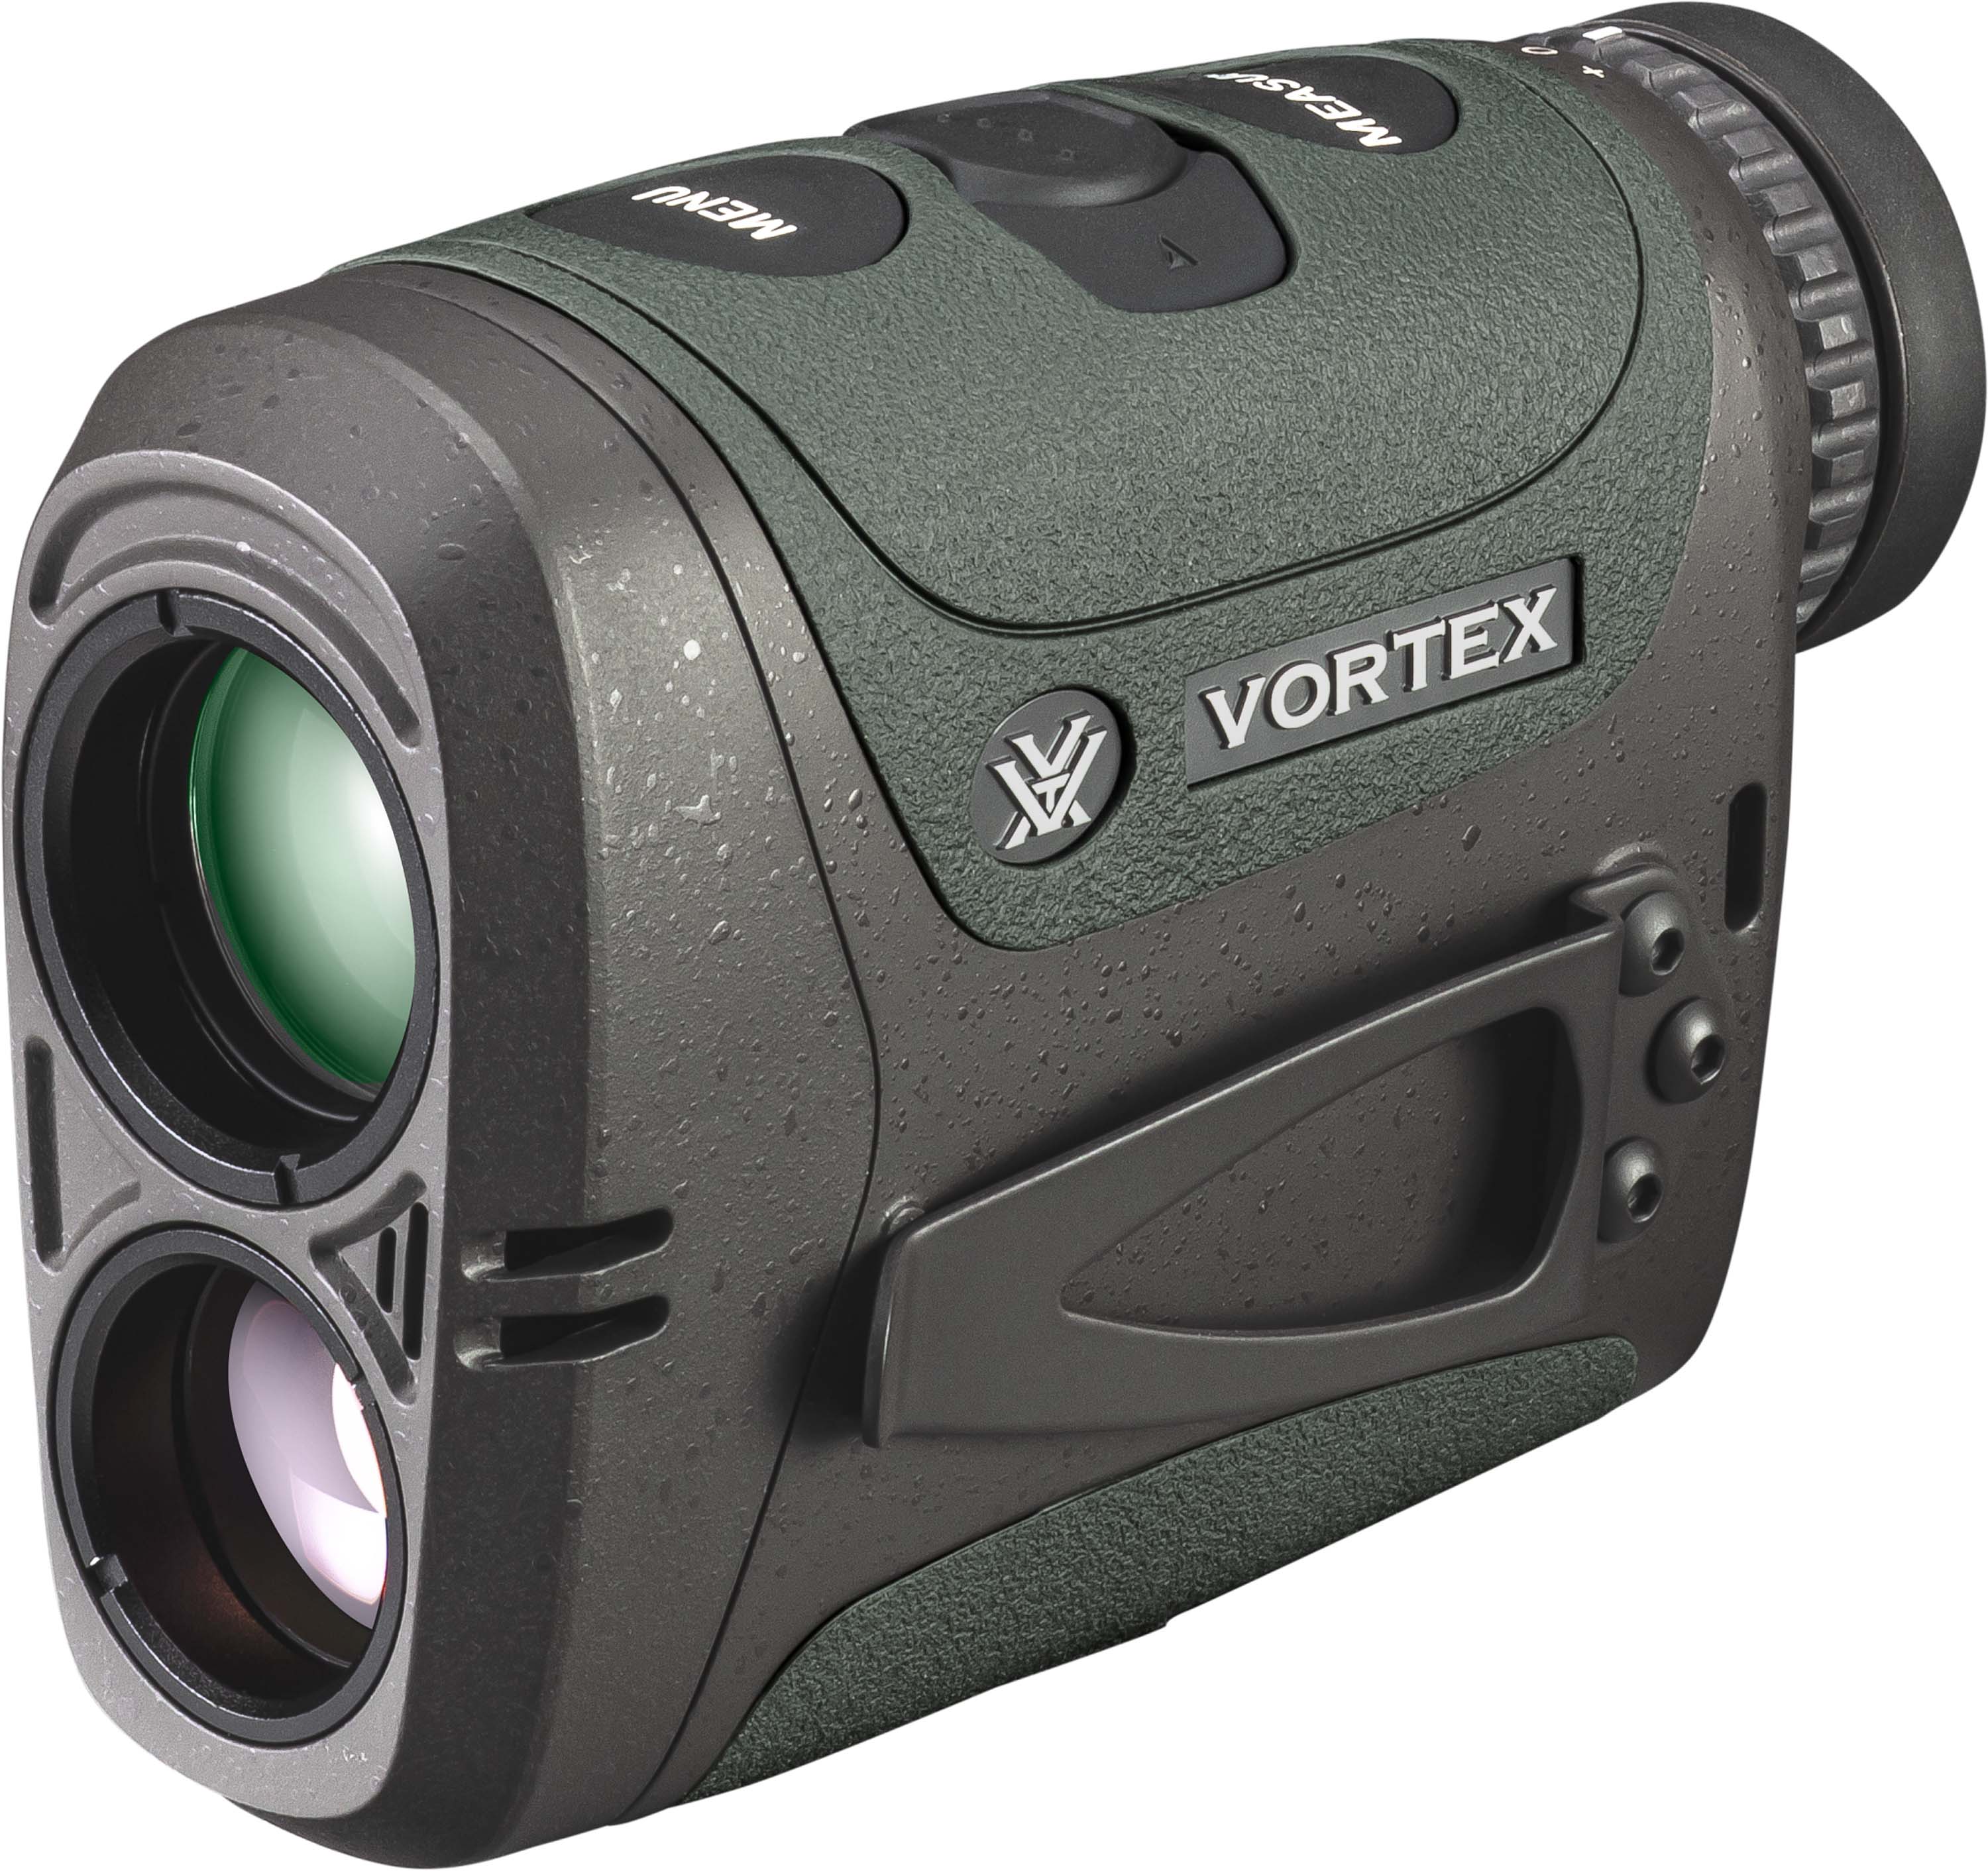 George Hanbury Apt Om toestemming te geven Reviews & Ratings for Vortex Razor HD 4000 7x25mm GB Ballistic Laser  Rangefinder